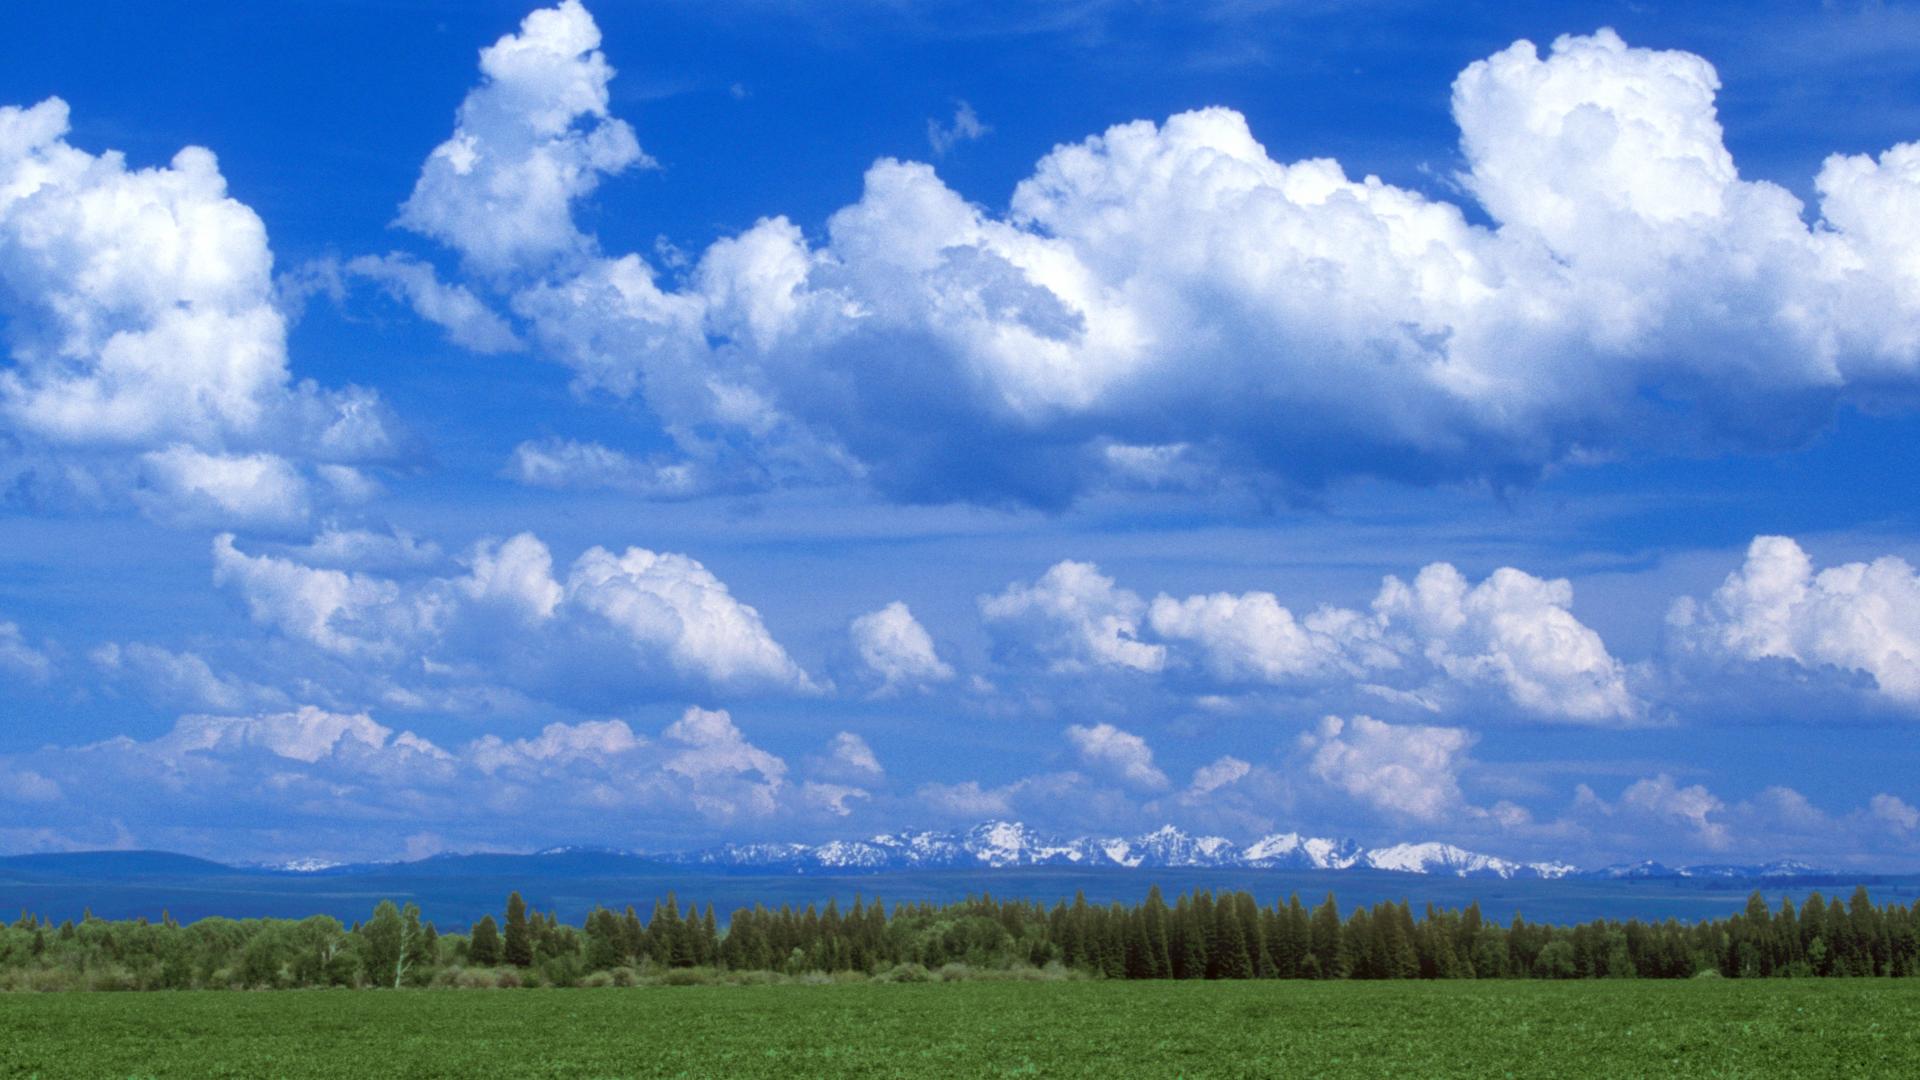 Blue Sky Hd Wallpaper Free Download : Download Clouds Wallpaper Hd ...